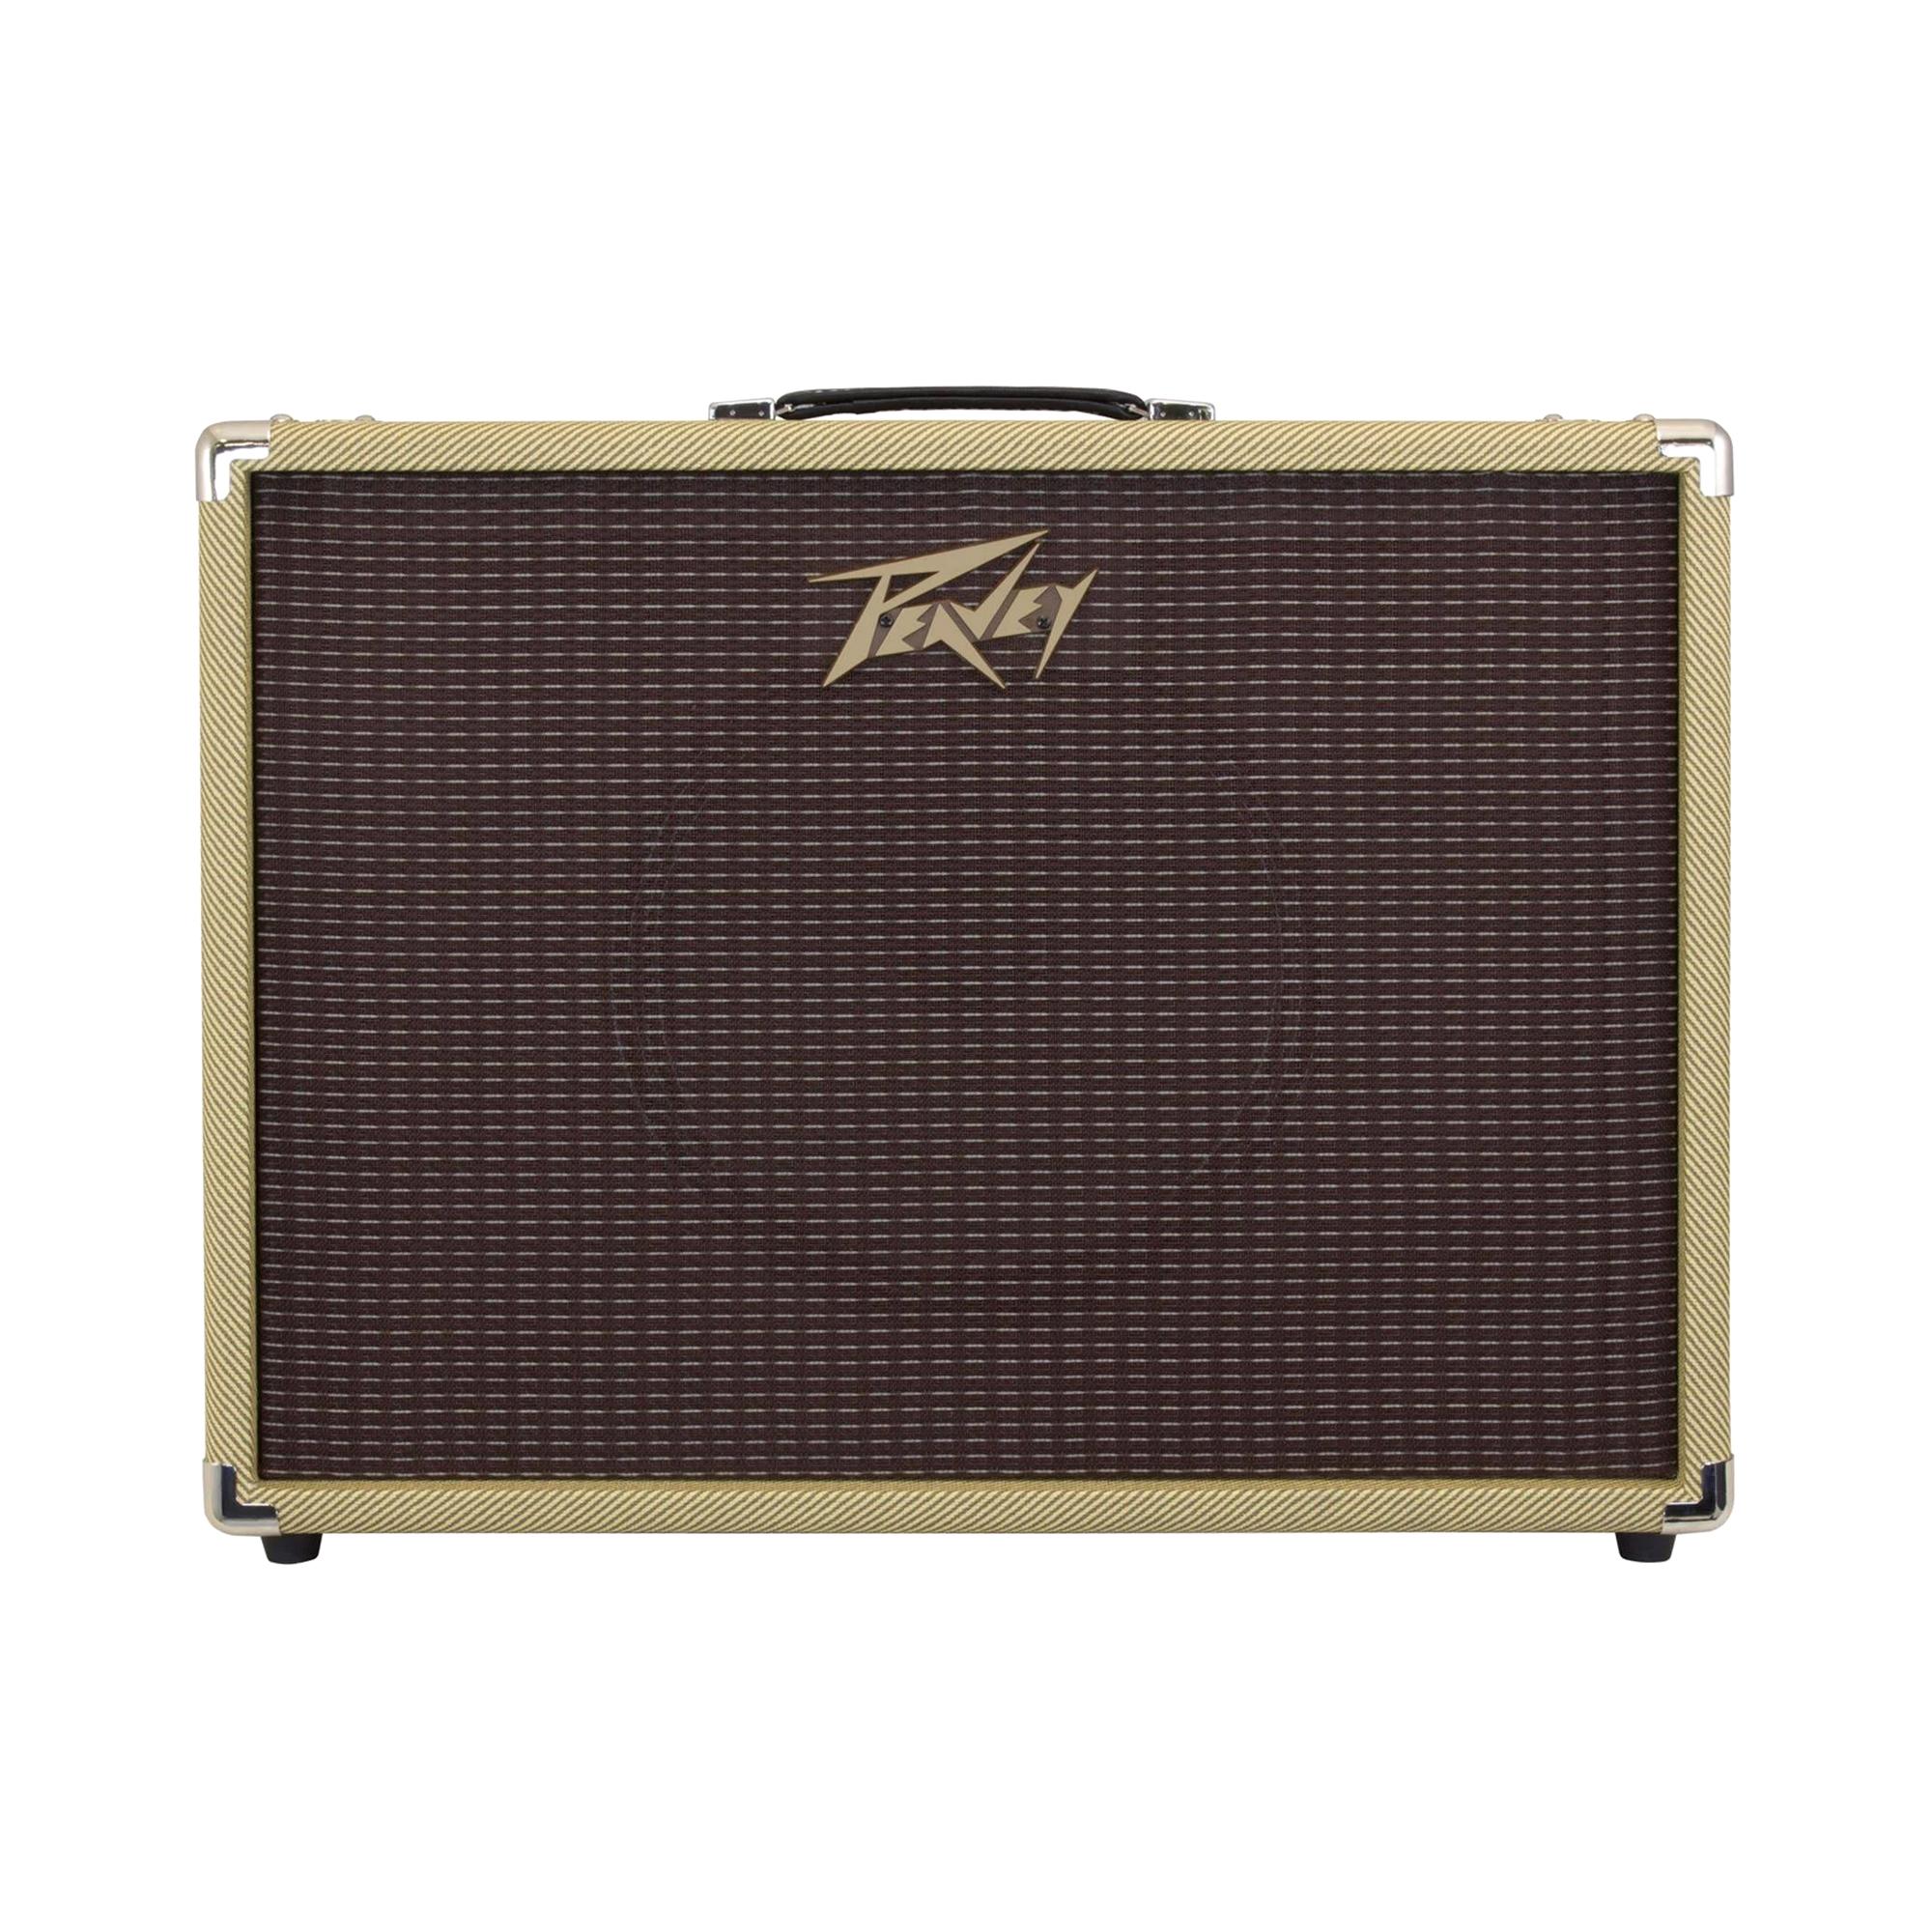 Peavey 112-C 1x12 Guitar Cabinet, Tweed